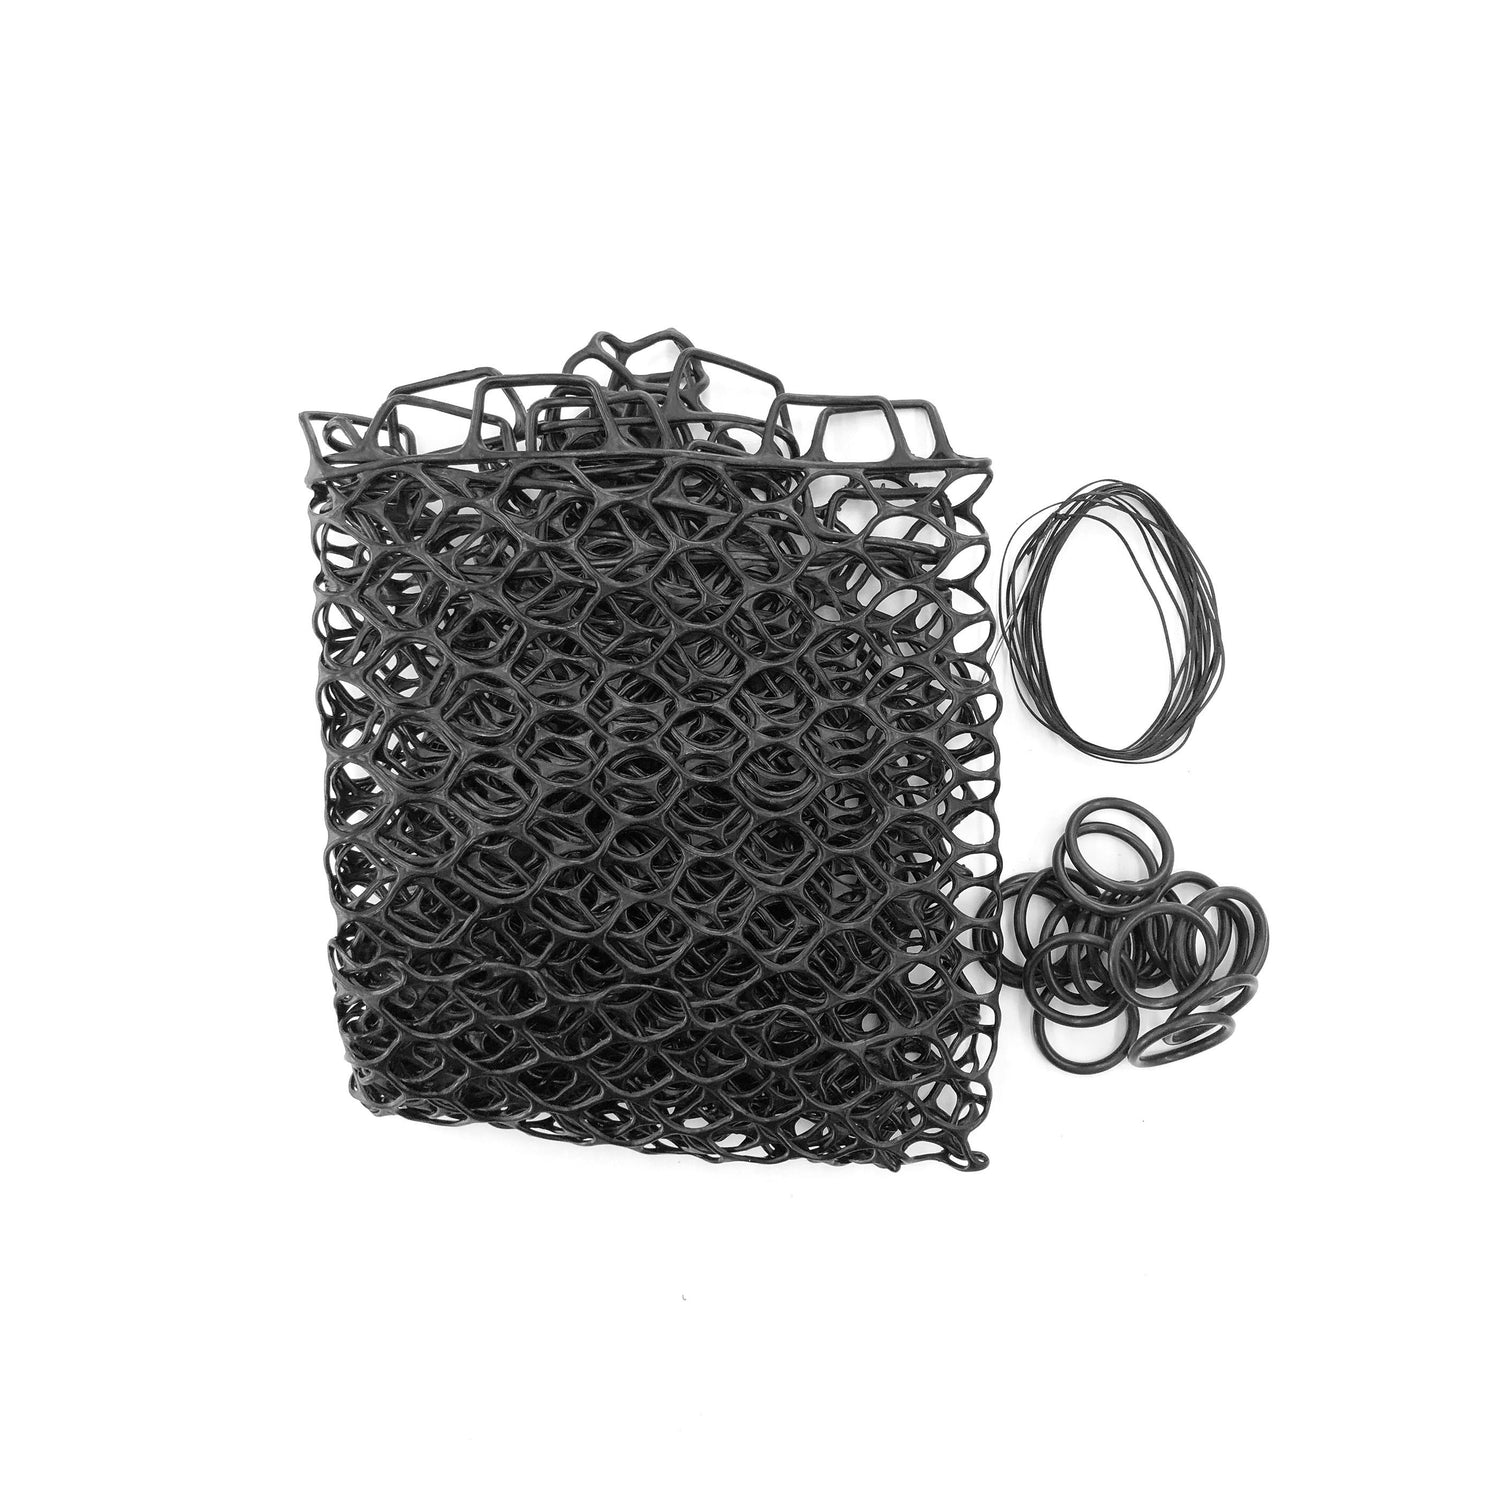 Lohuatrd Portable Mesh Fishing Net, Nylon Net Storage Bag for Fishing Angling, Tear Resistance Fish Protection Net, Size: 23.62